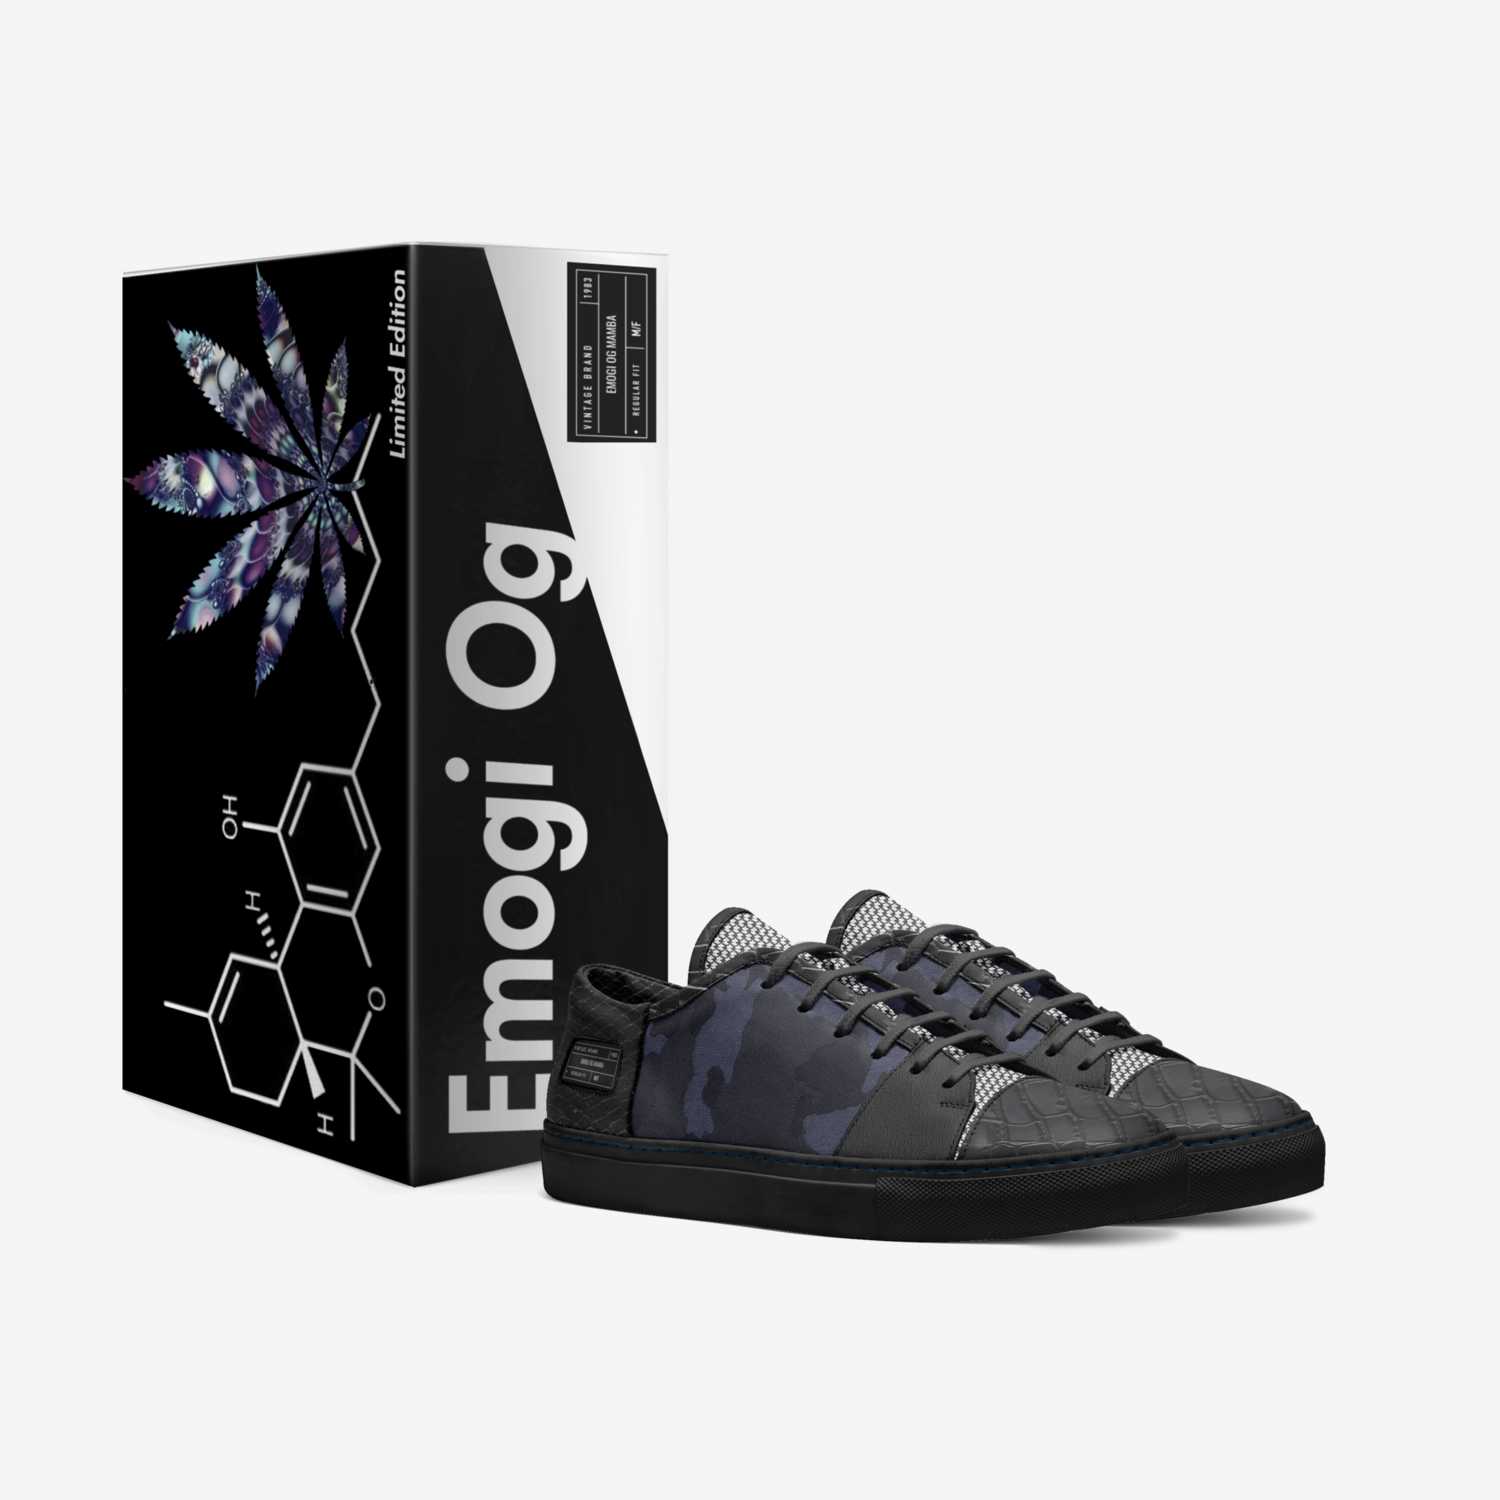 Emogi Og Mamba custom made in Italy shoes by Jennifer Hollywood | Box view